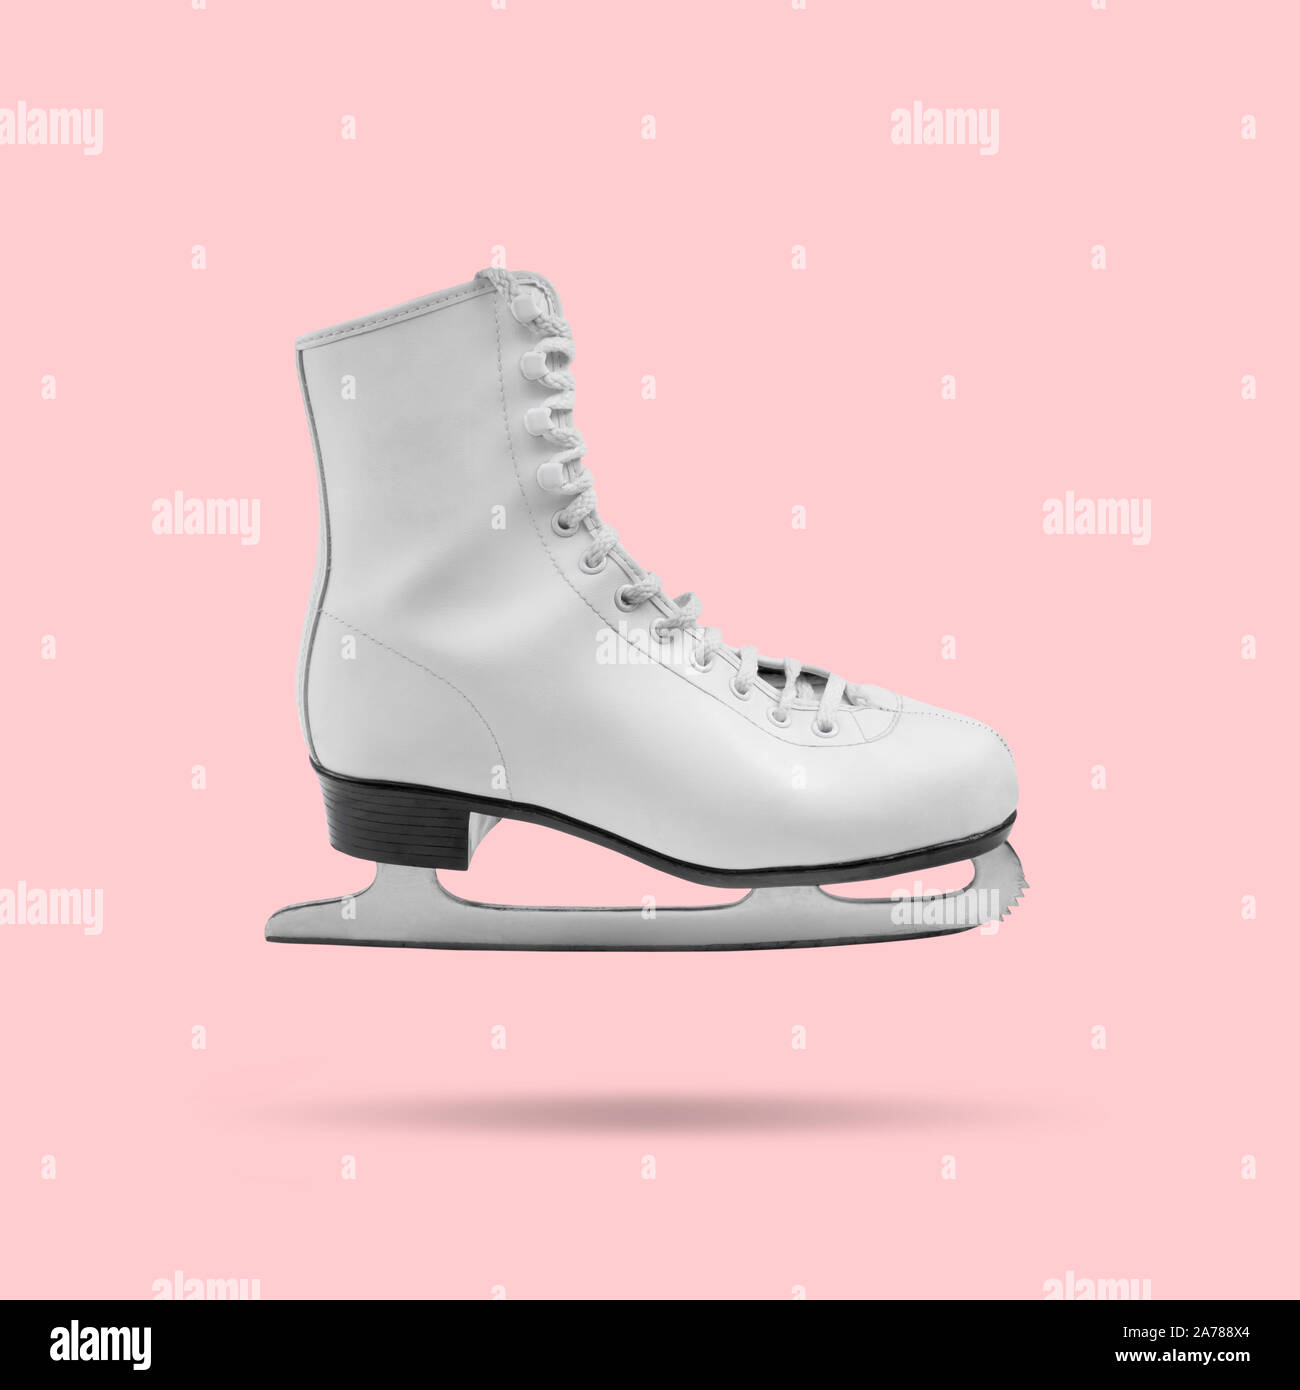 Floating white ice skate on pink background, minimal design Stock Photo